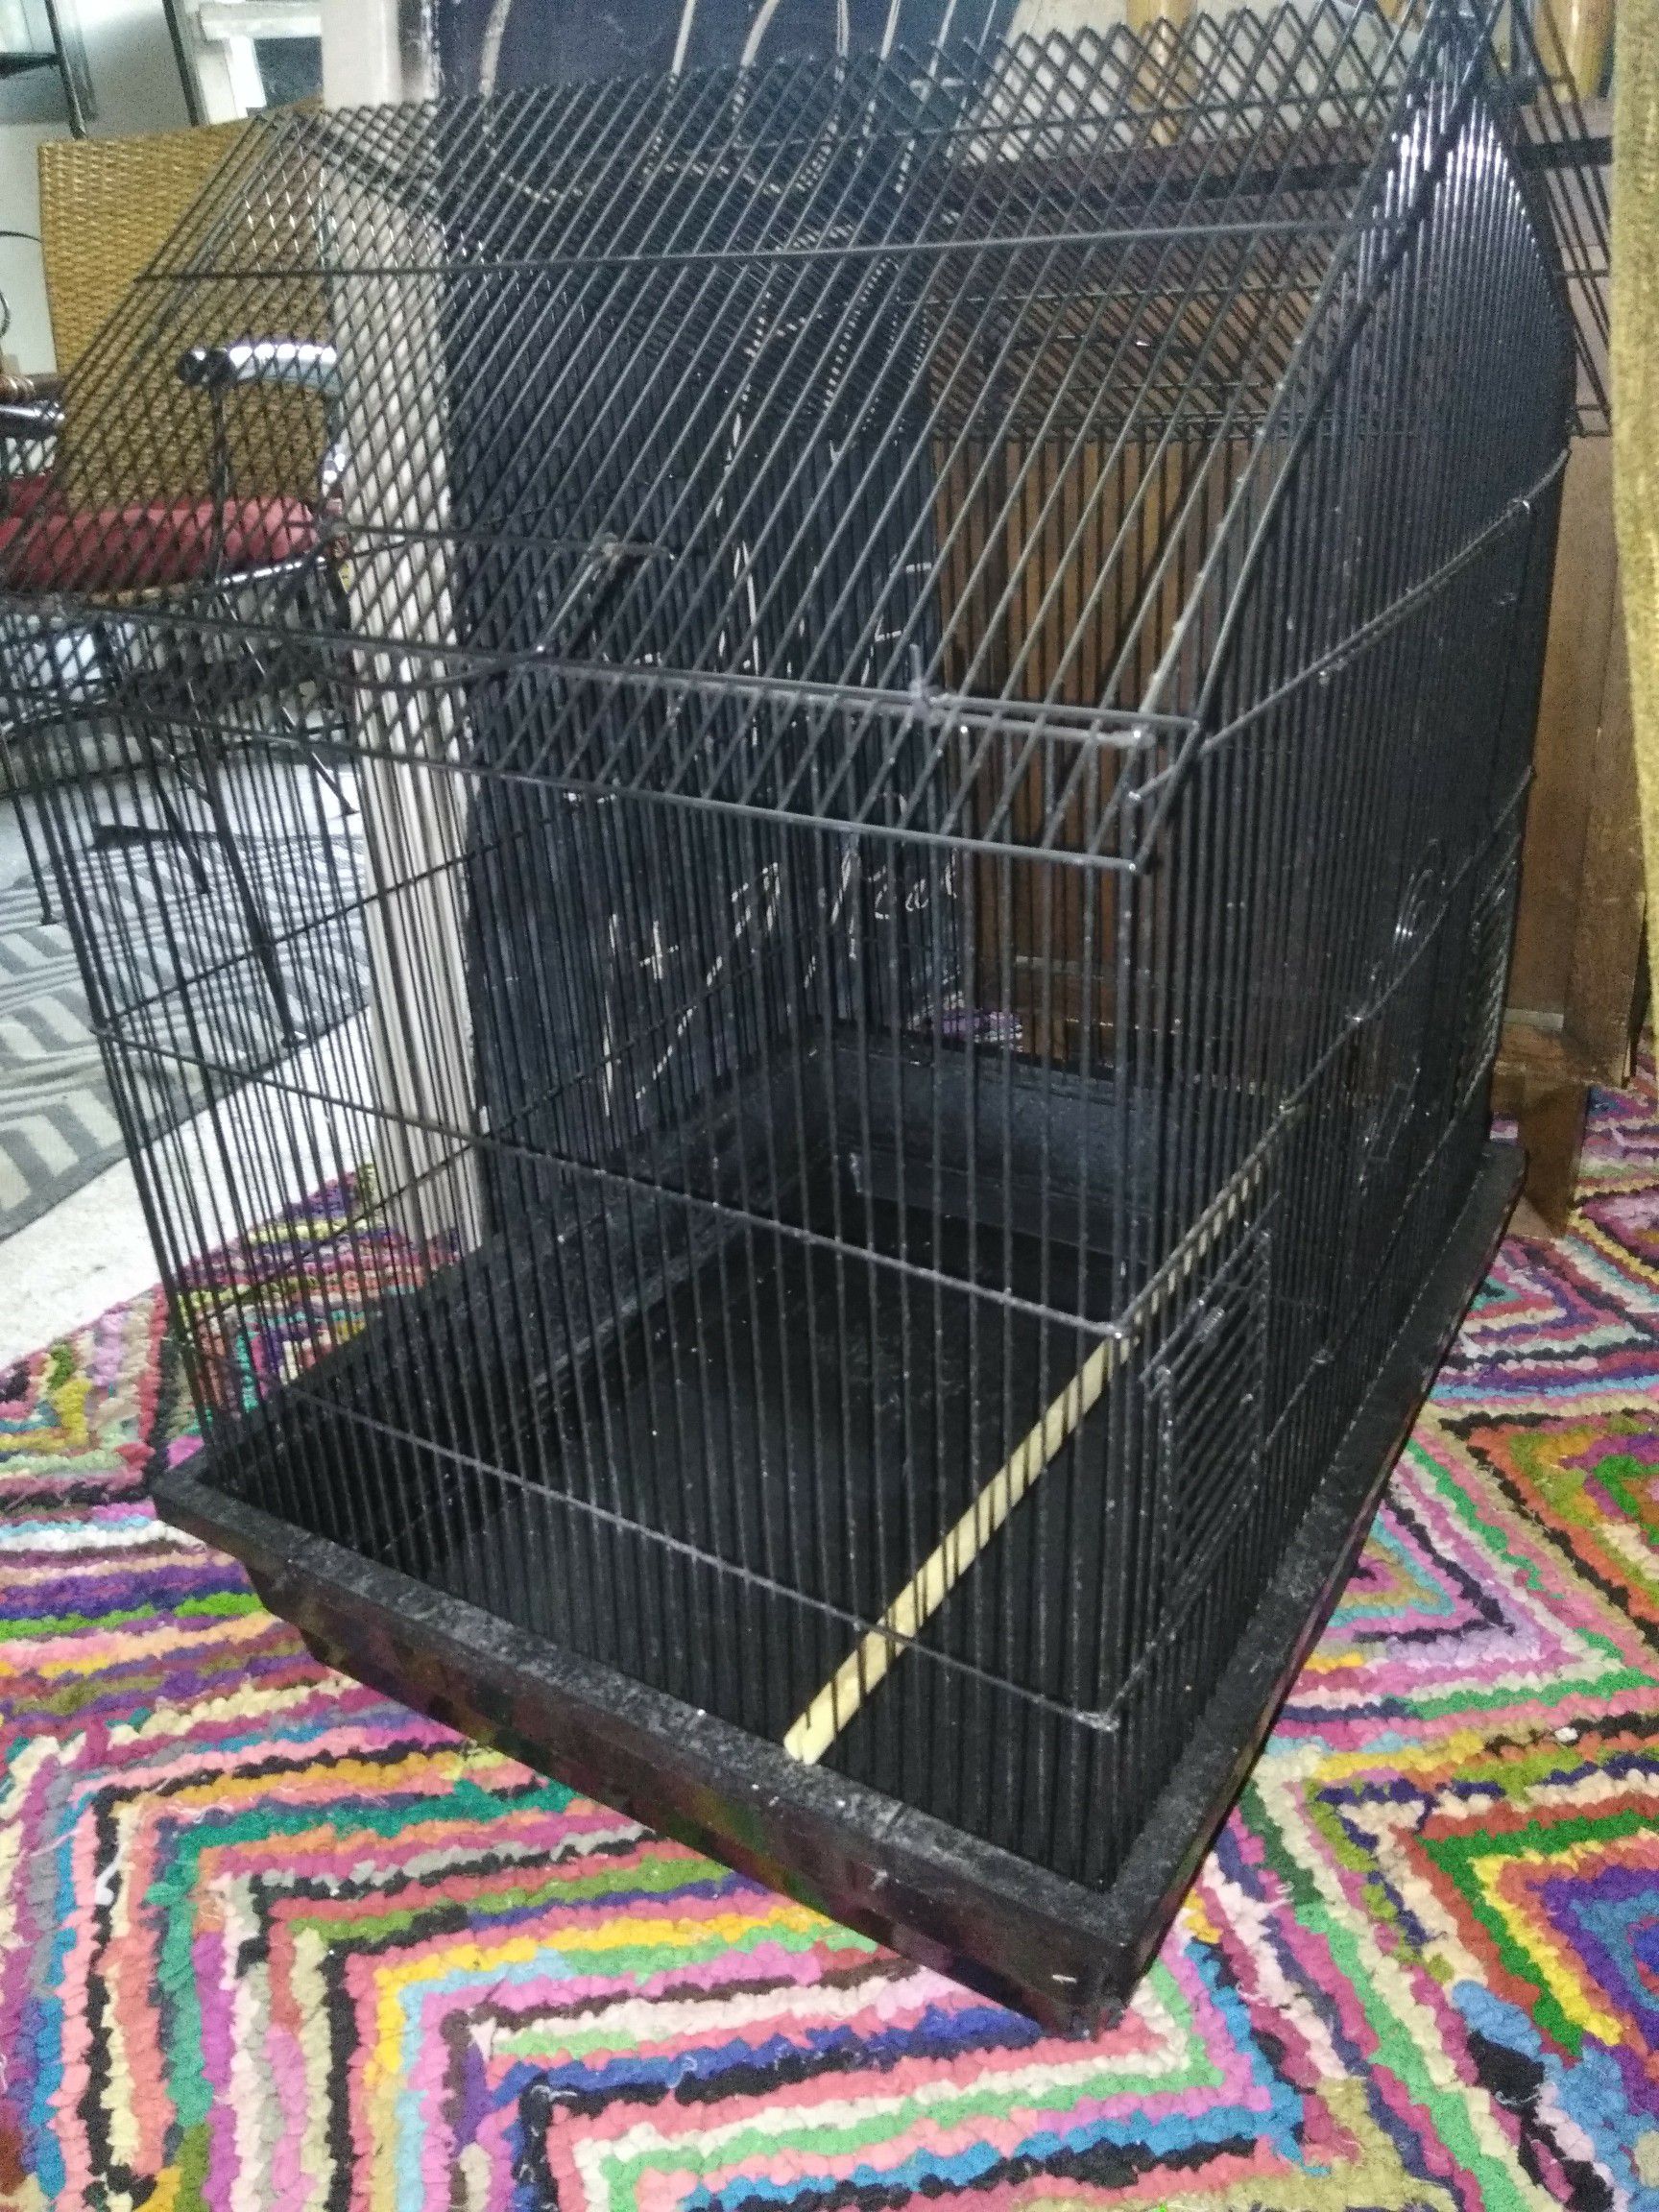 Large bird cage.